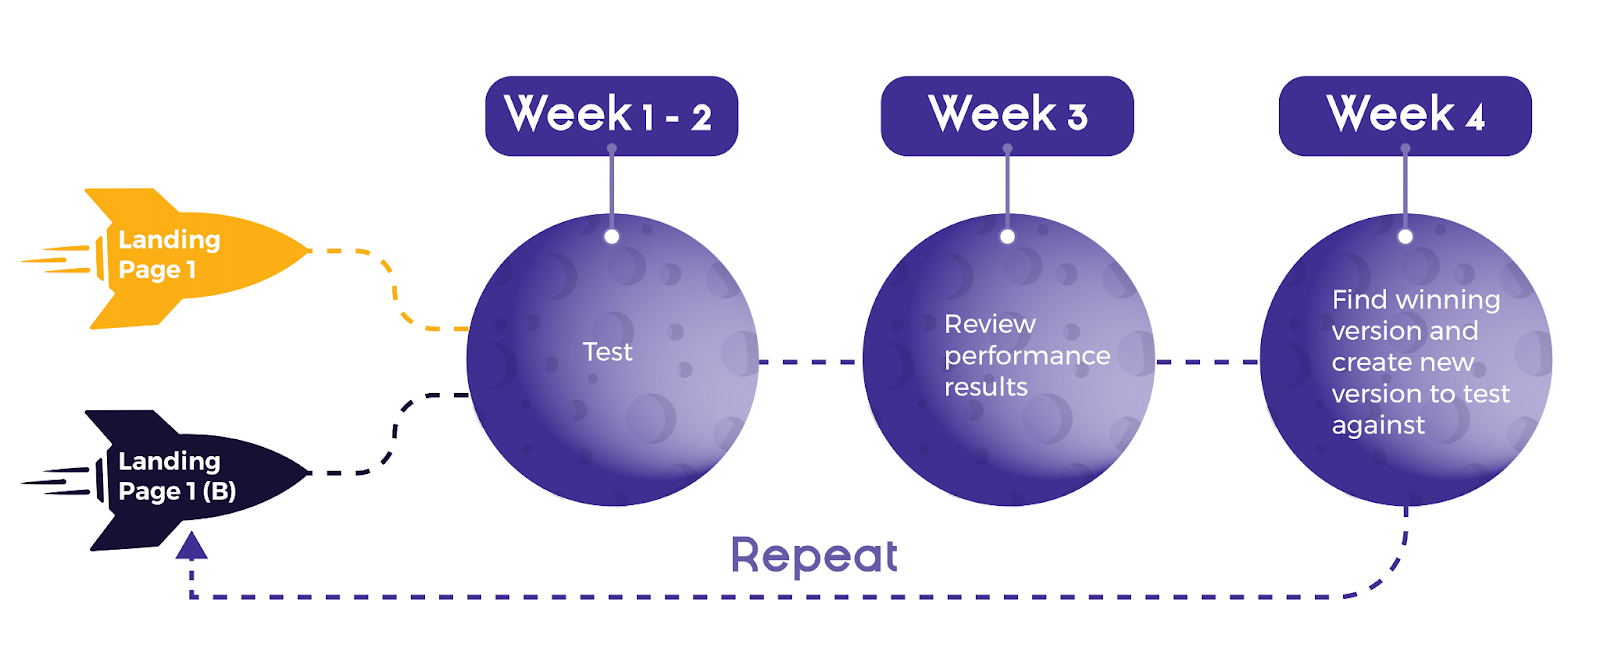 Multivariate testing timeline from week 1 to 4.